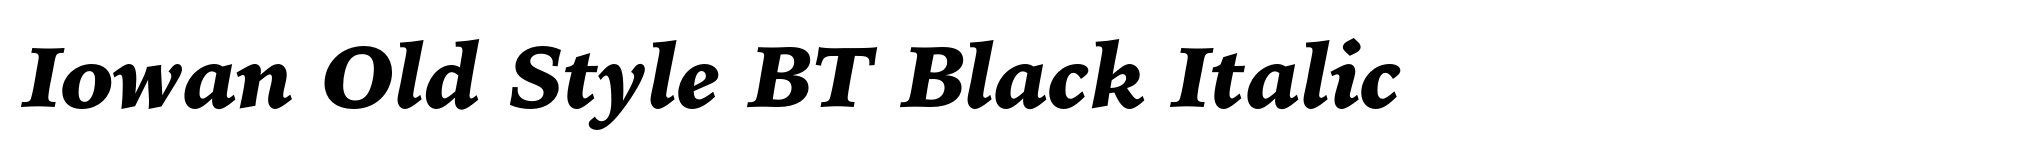 Iowan Old Style BT Black Italic image